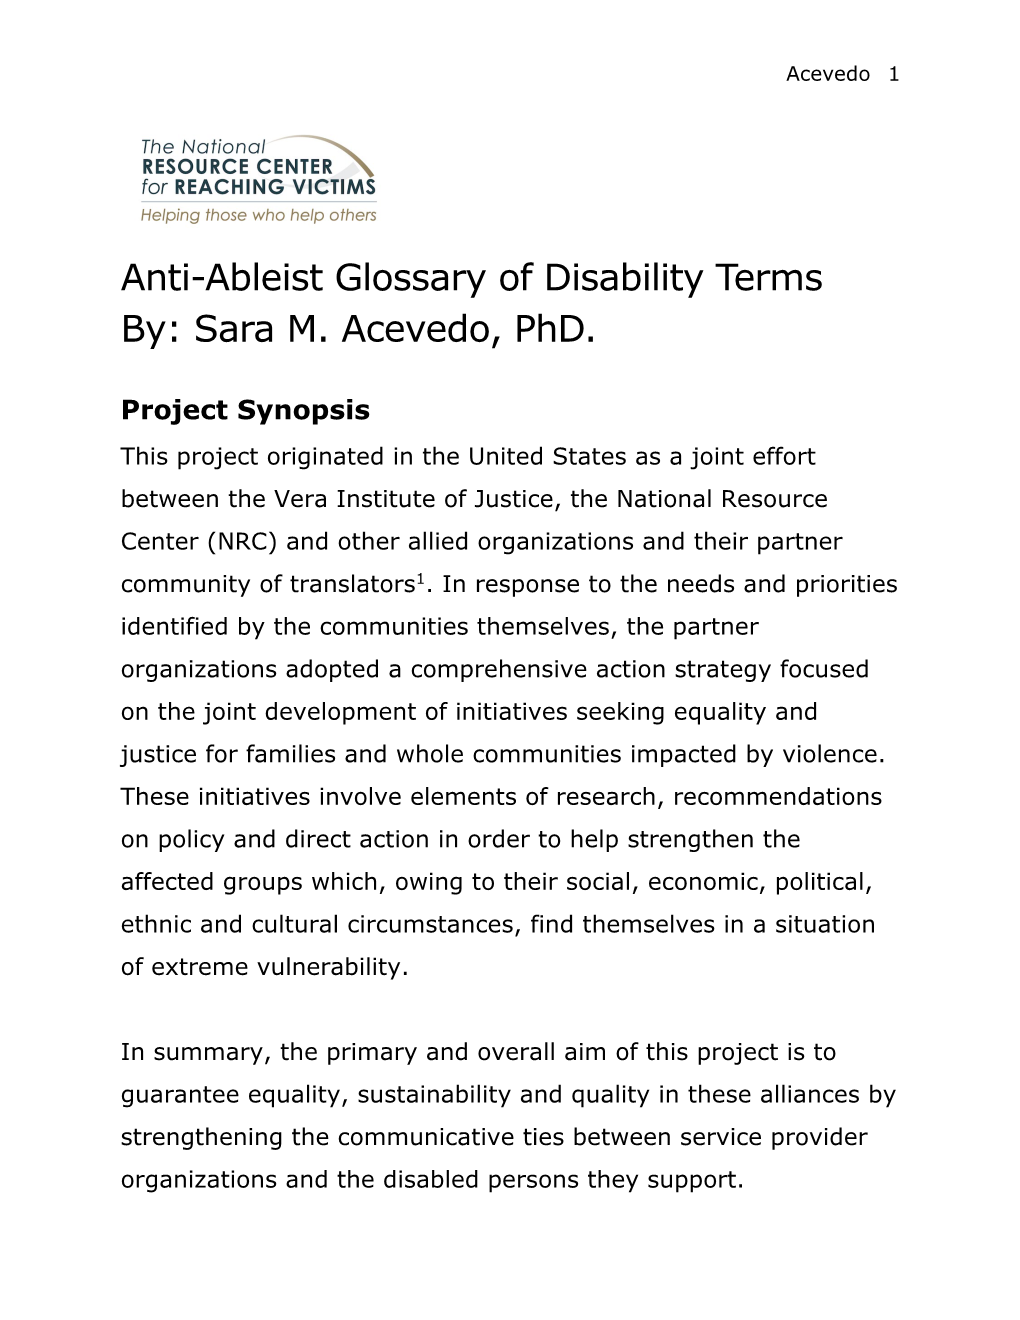 Anti-Ableist Glossary of Disability Terms By: Sara M. Acevedo, Phd